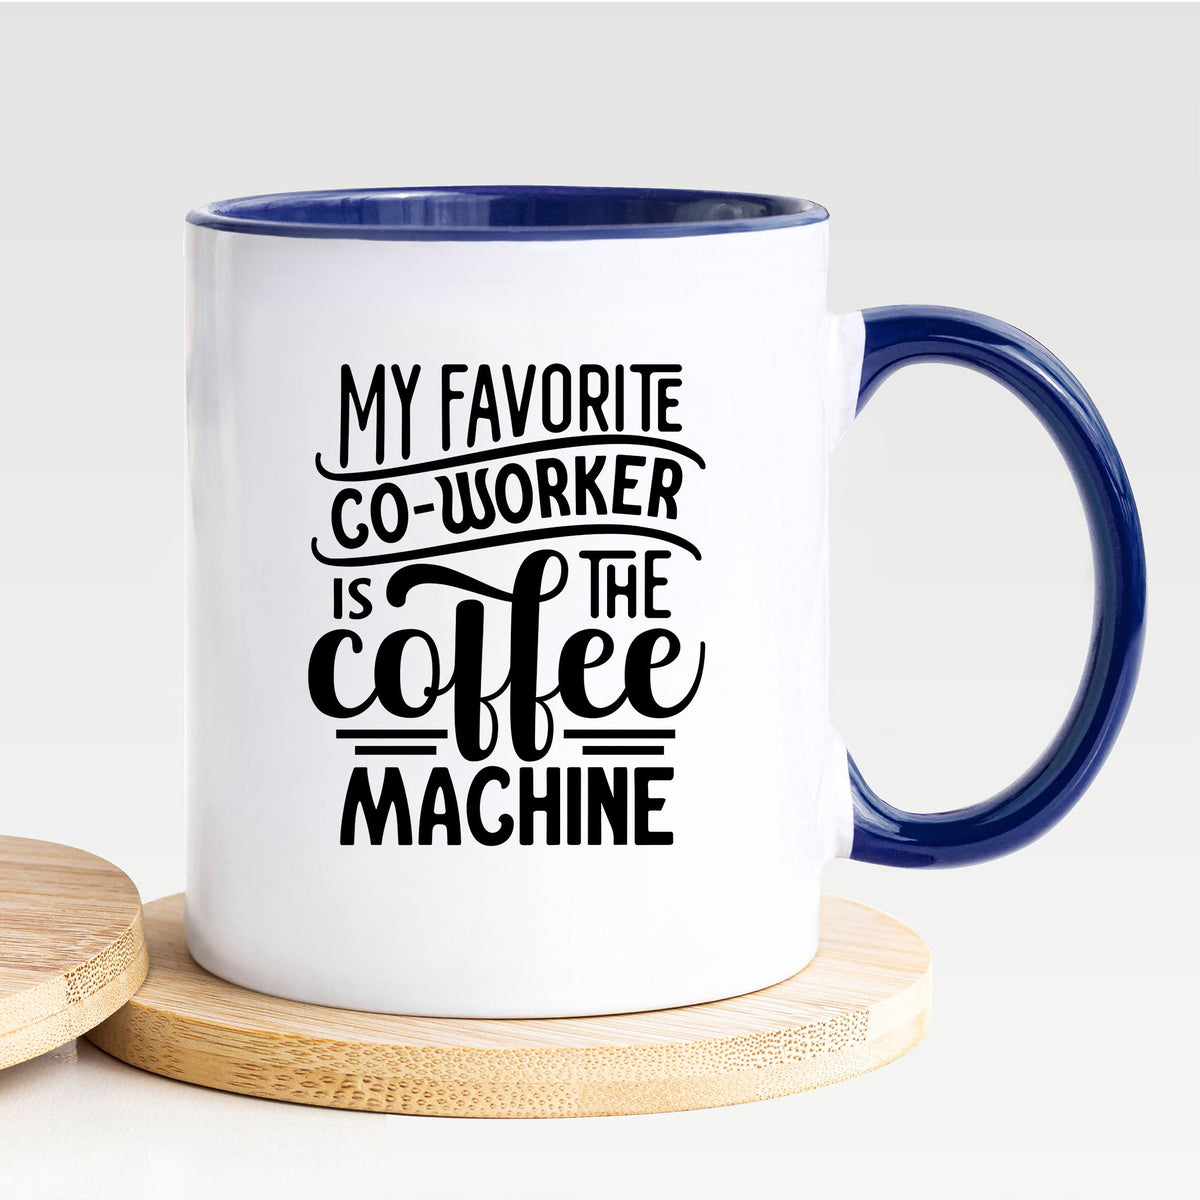 My Favorite Co-Worker Is The Coffee Machine - Mug